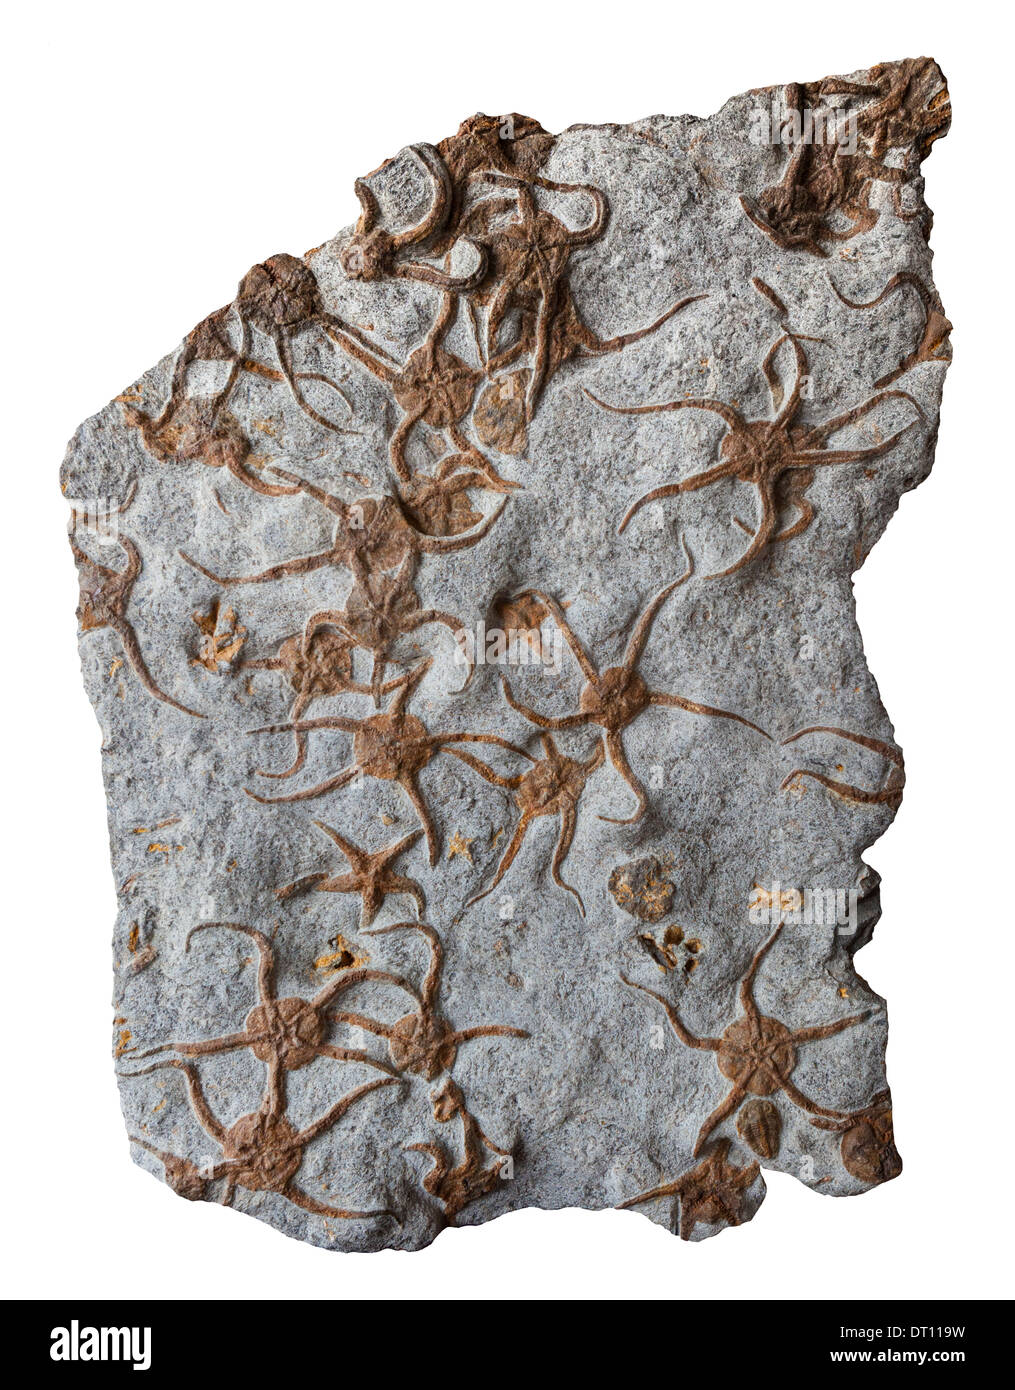 many fossilized brittle starfish Stock Photo